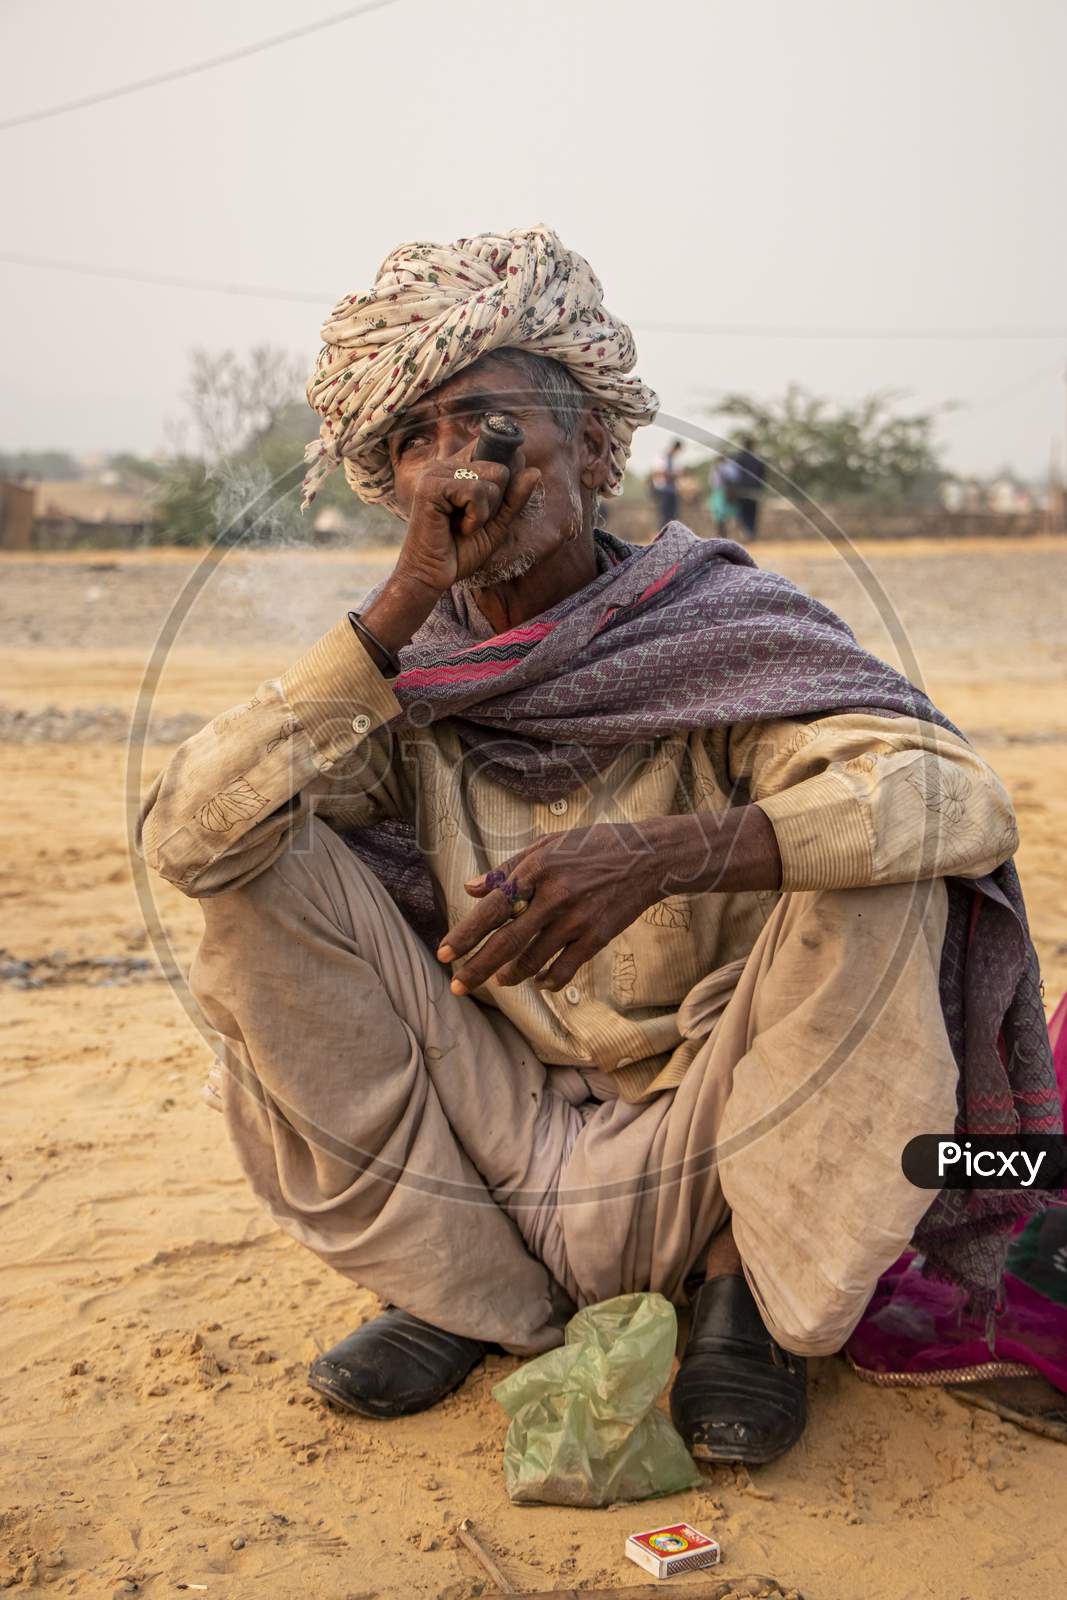 A tribal Rajasthani man smoking chillum